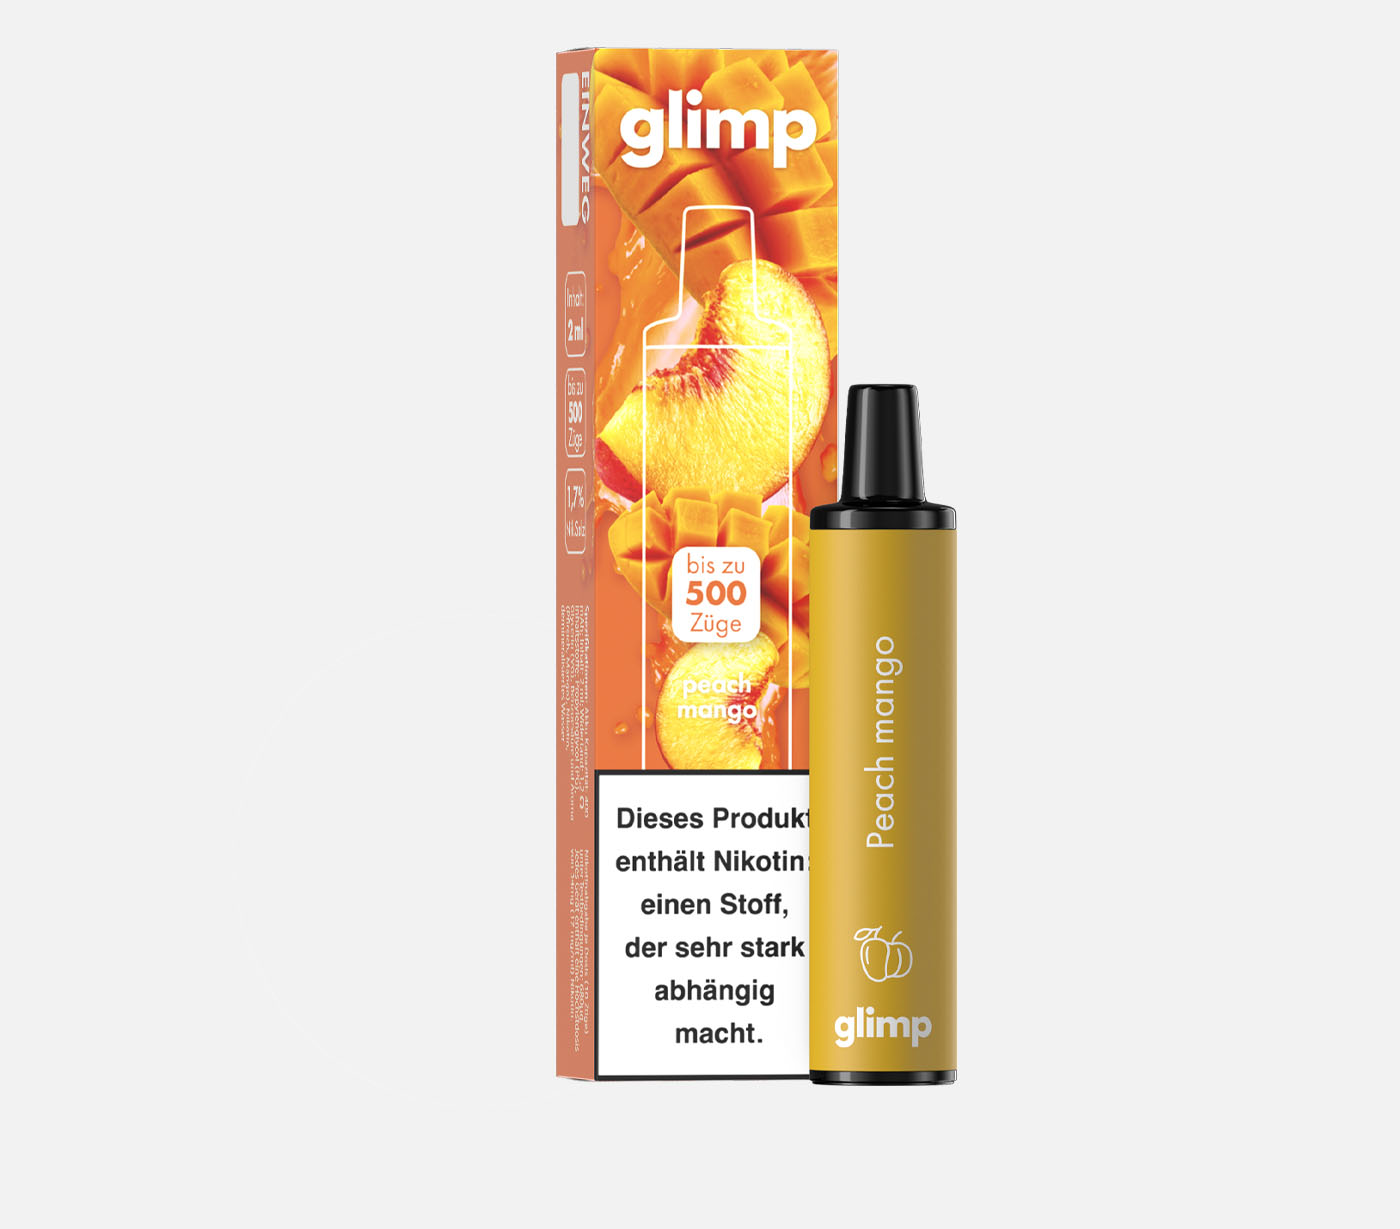 GLIMP peach mango